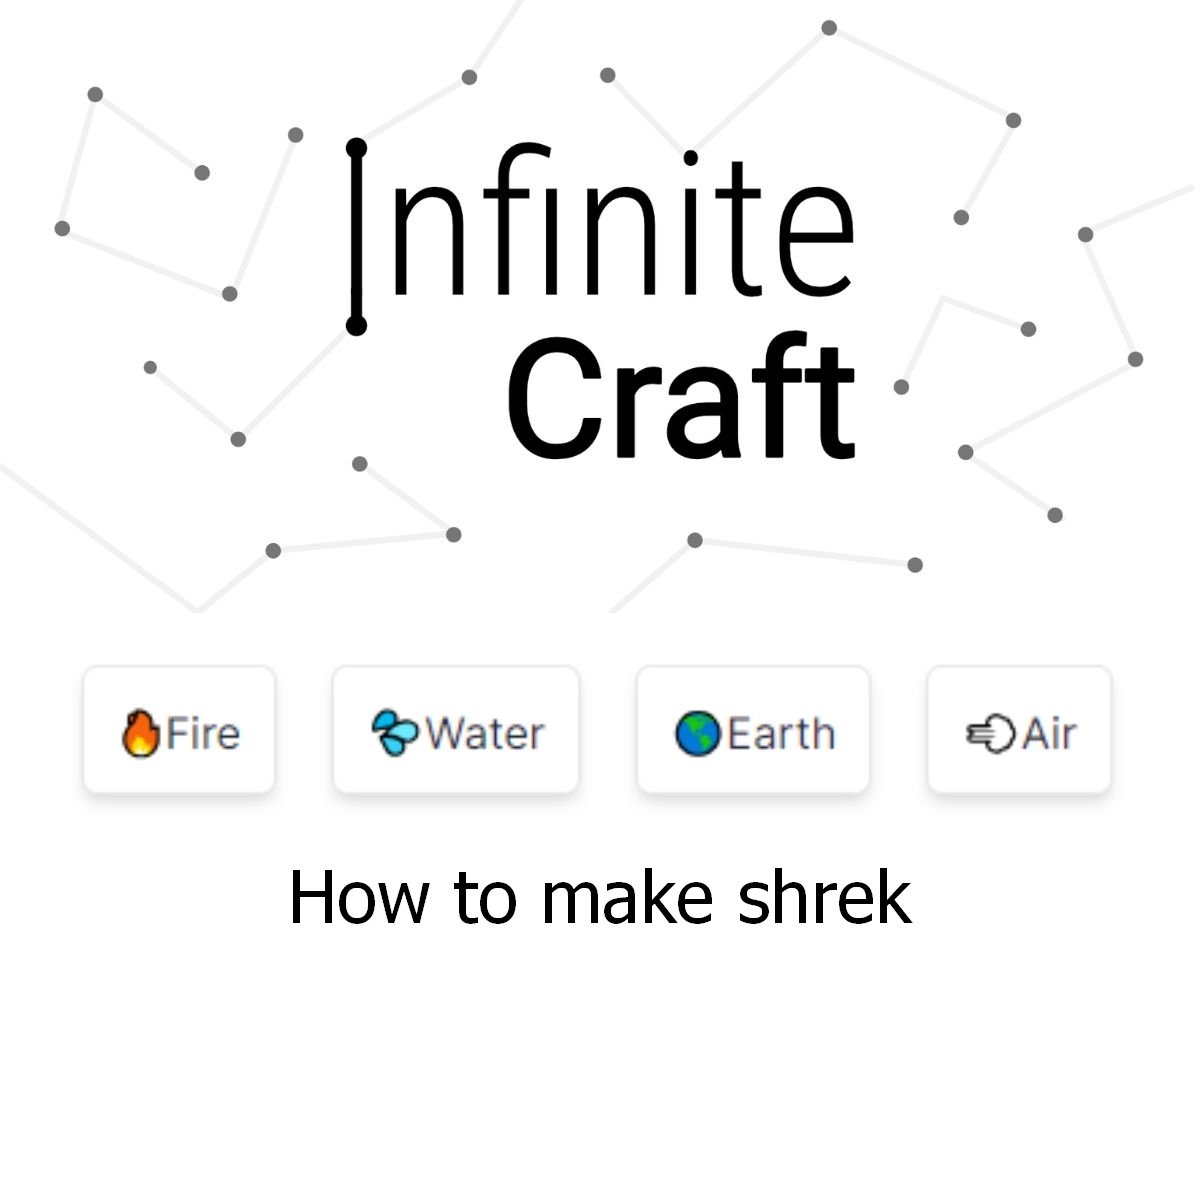 how to make shrek in infinite craft